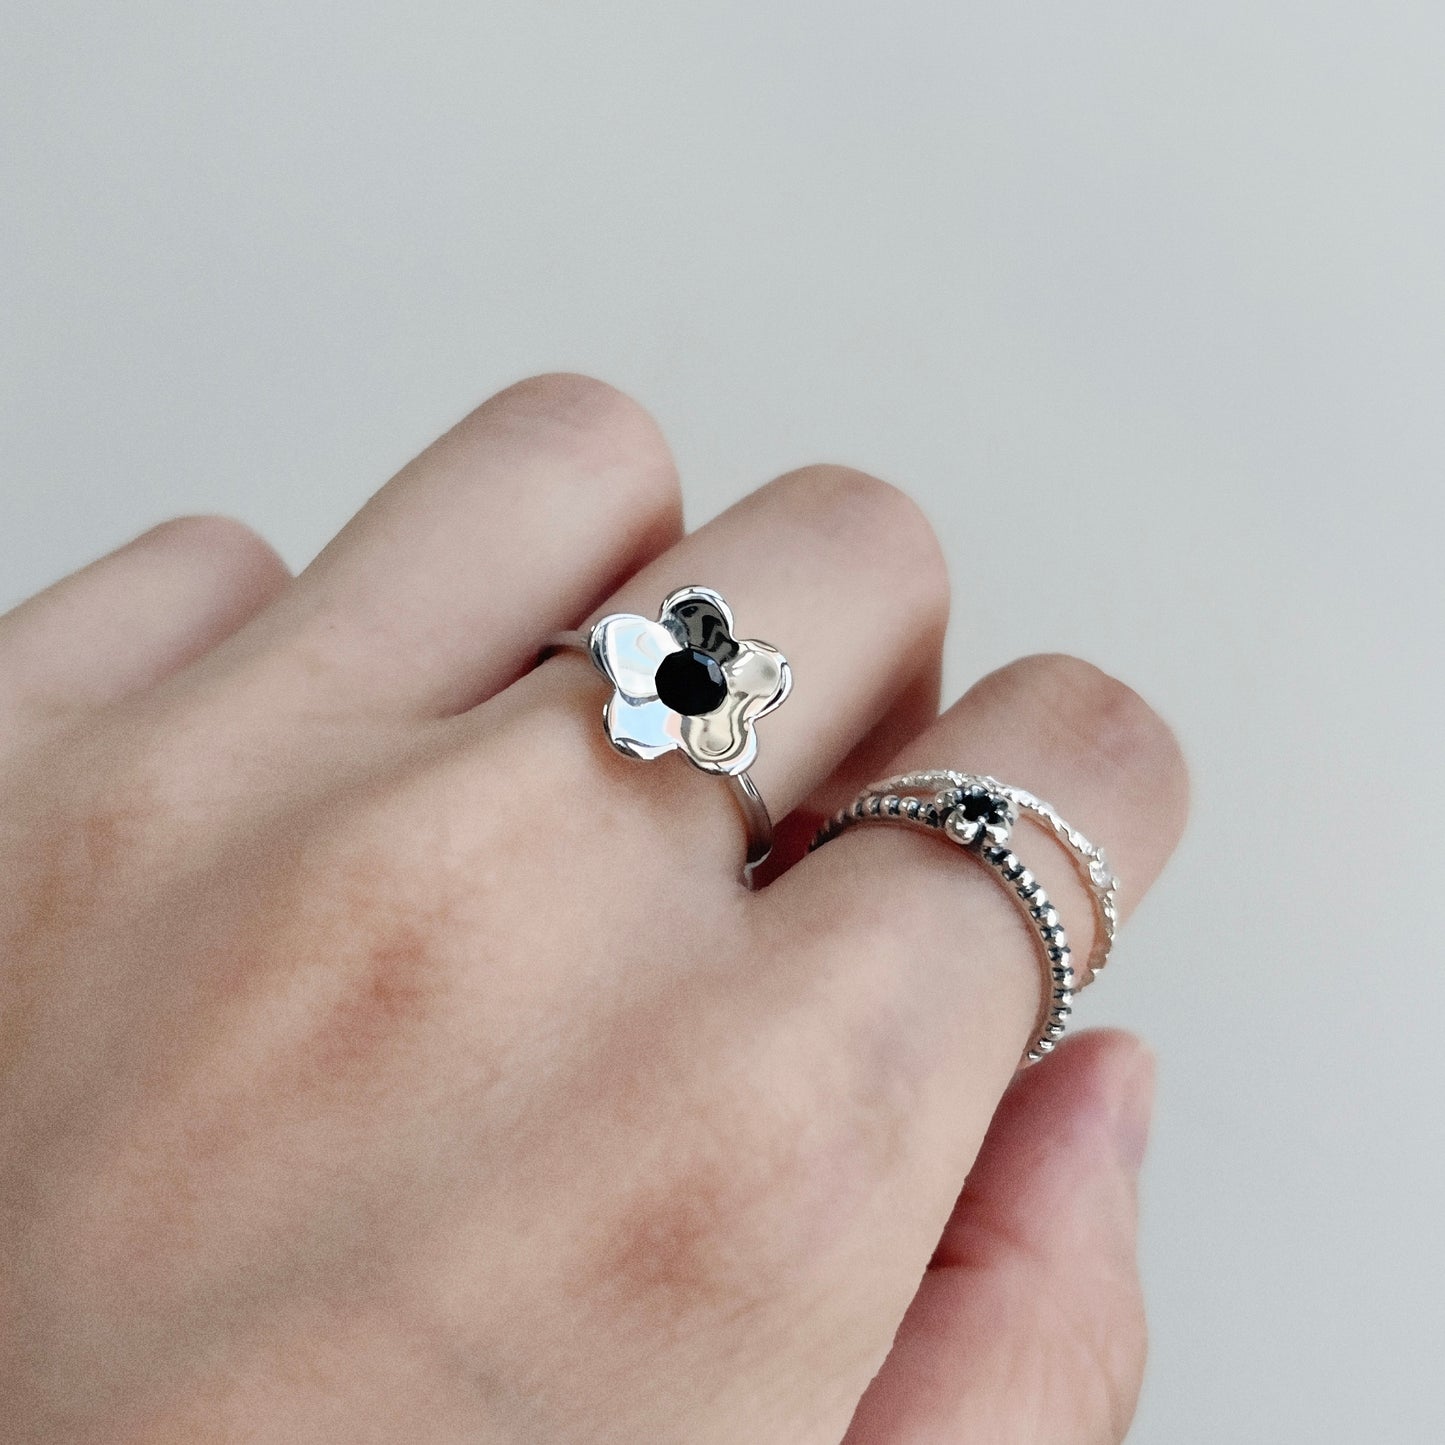 S925 Small Black Crystal Fafa Ring